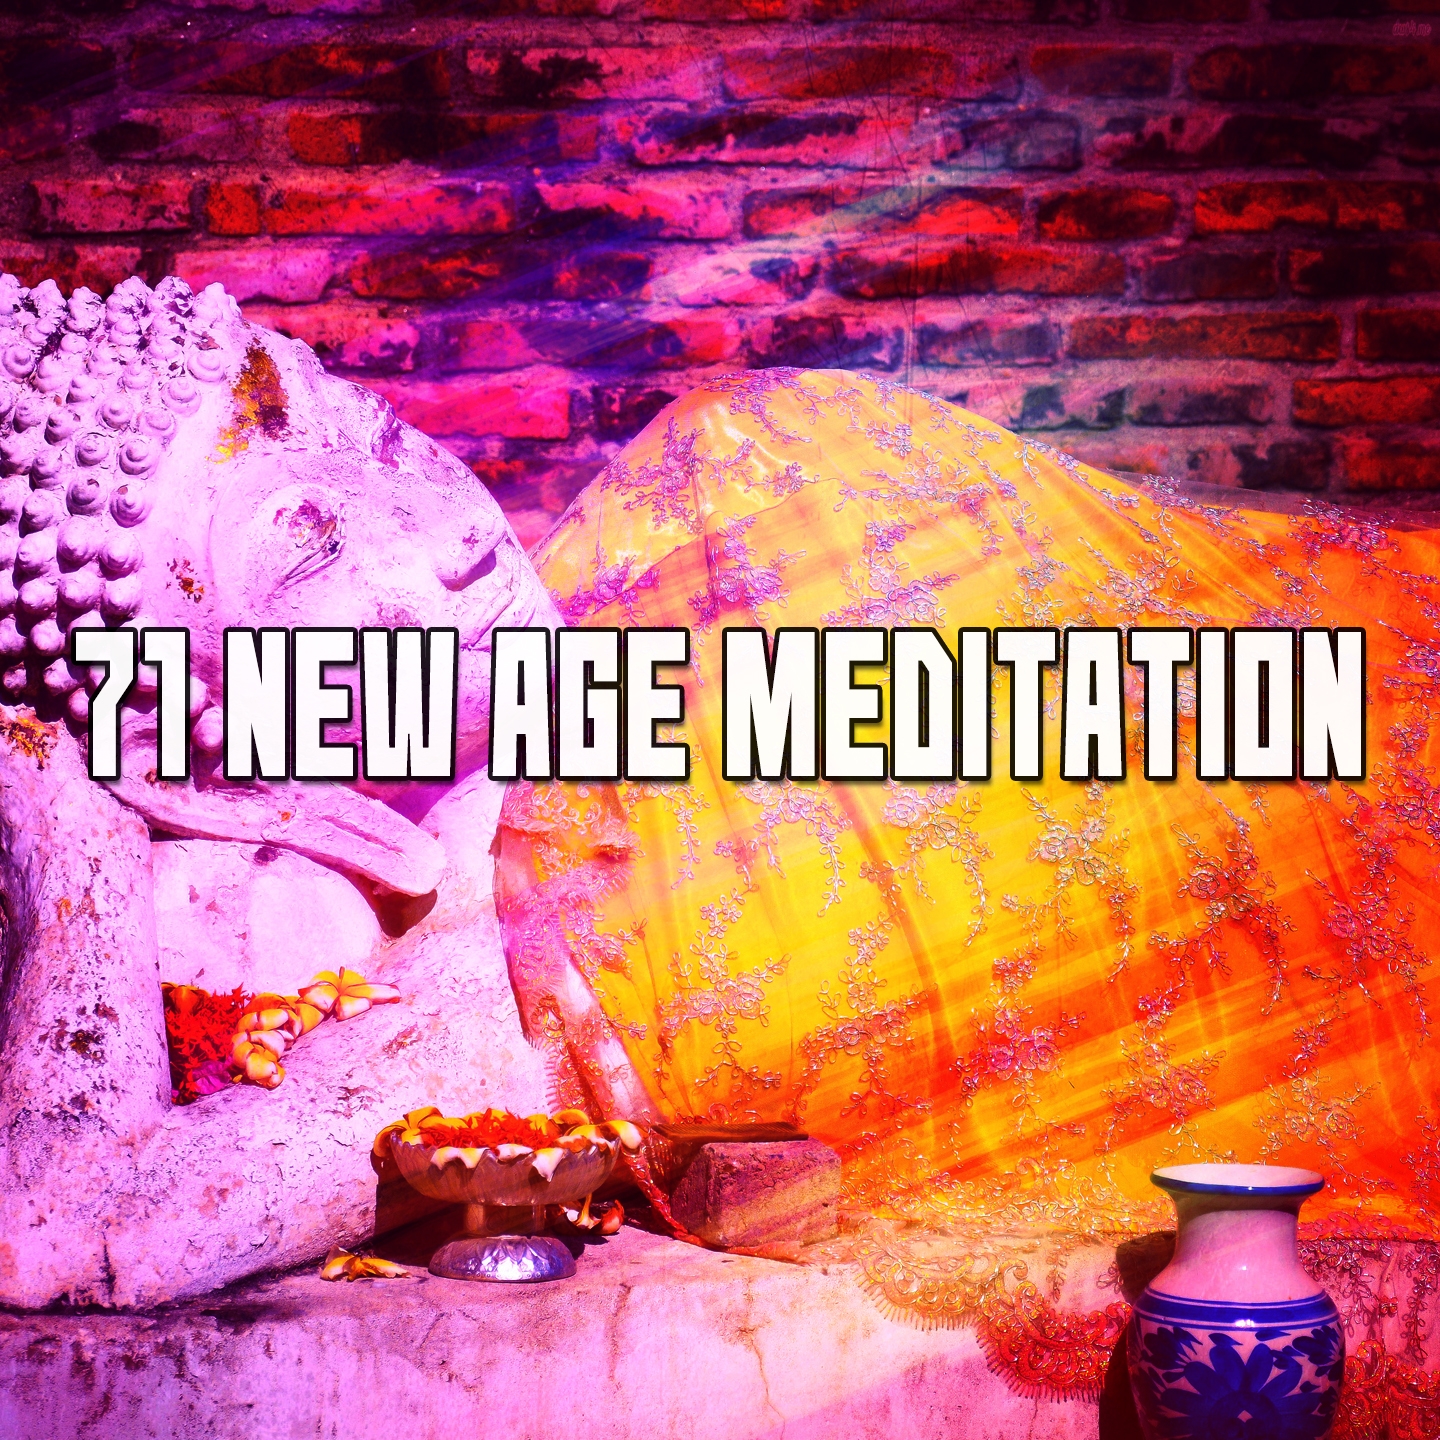 71 New Age Meditation